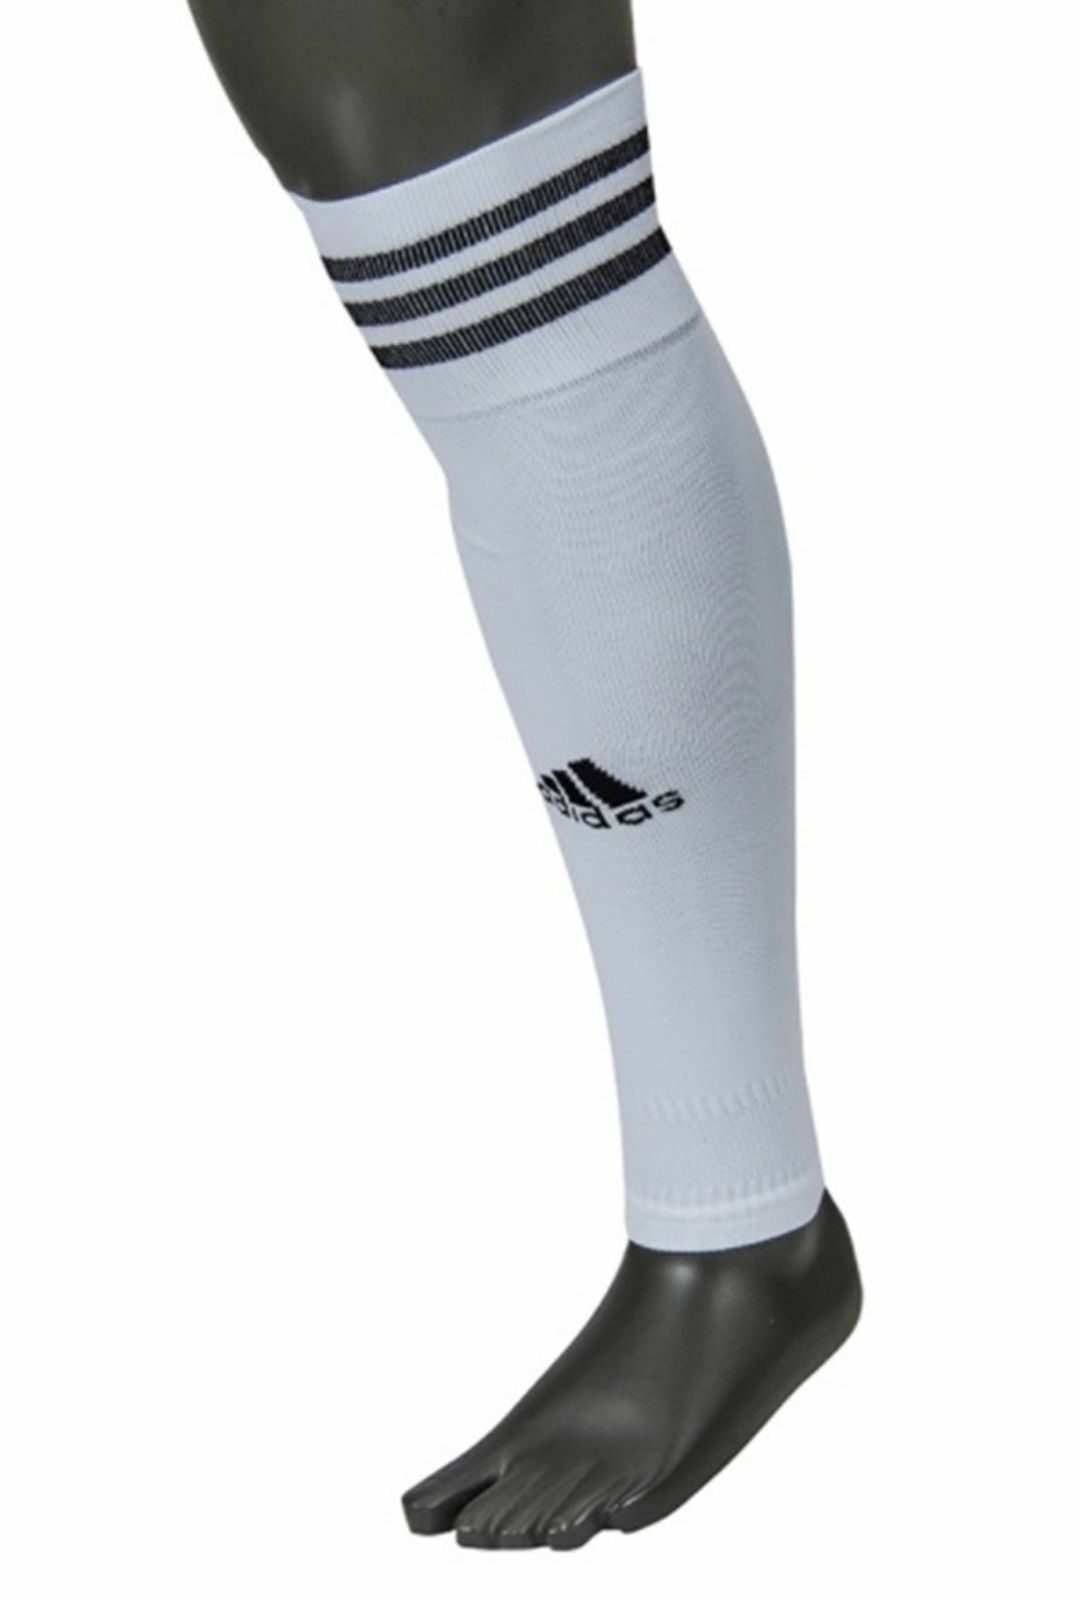 Adidas hockey socks